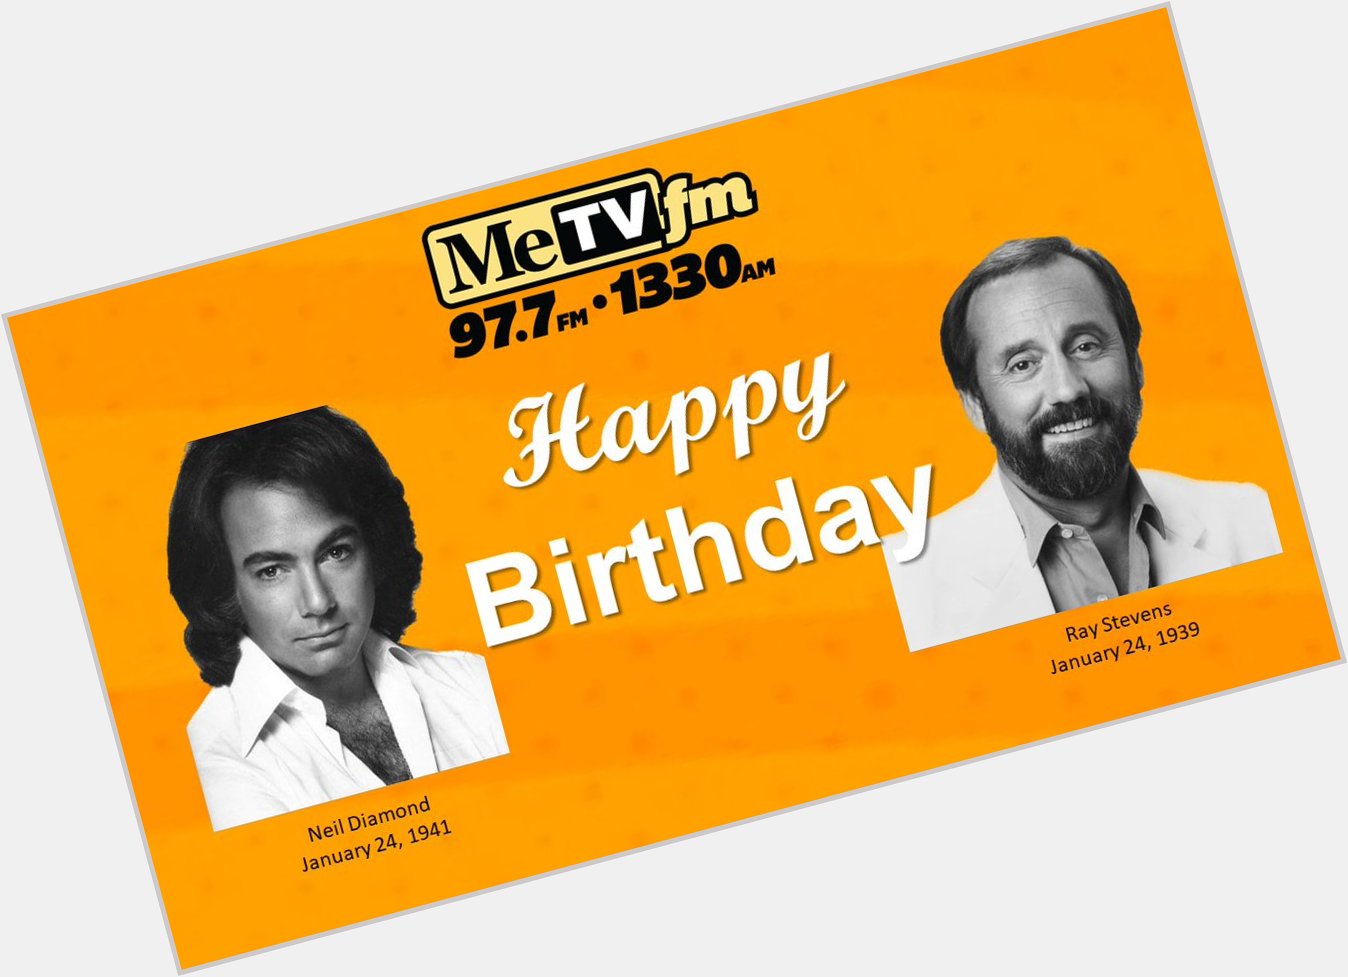 Happy Birthday Neil Diamond and Ray Stevens! 